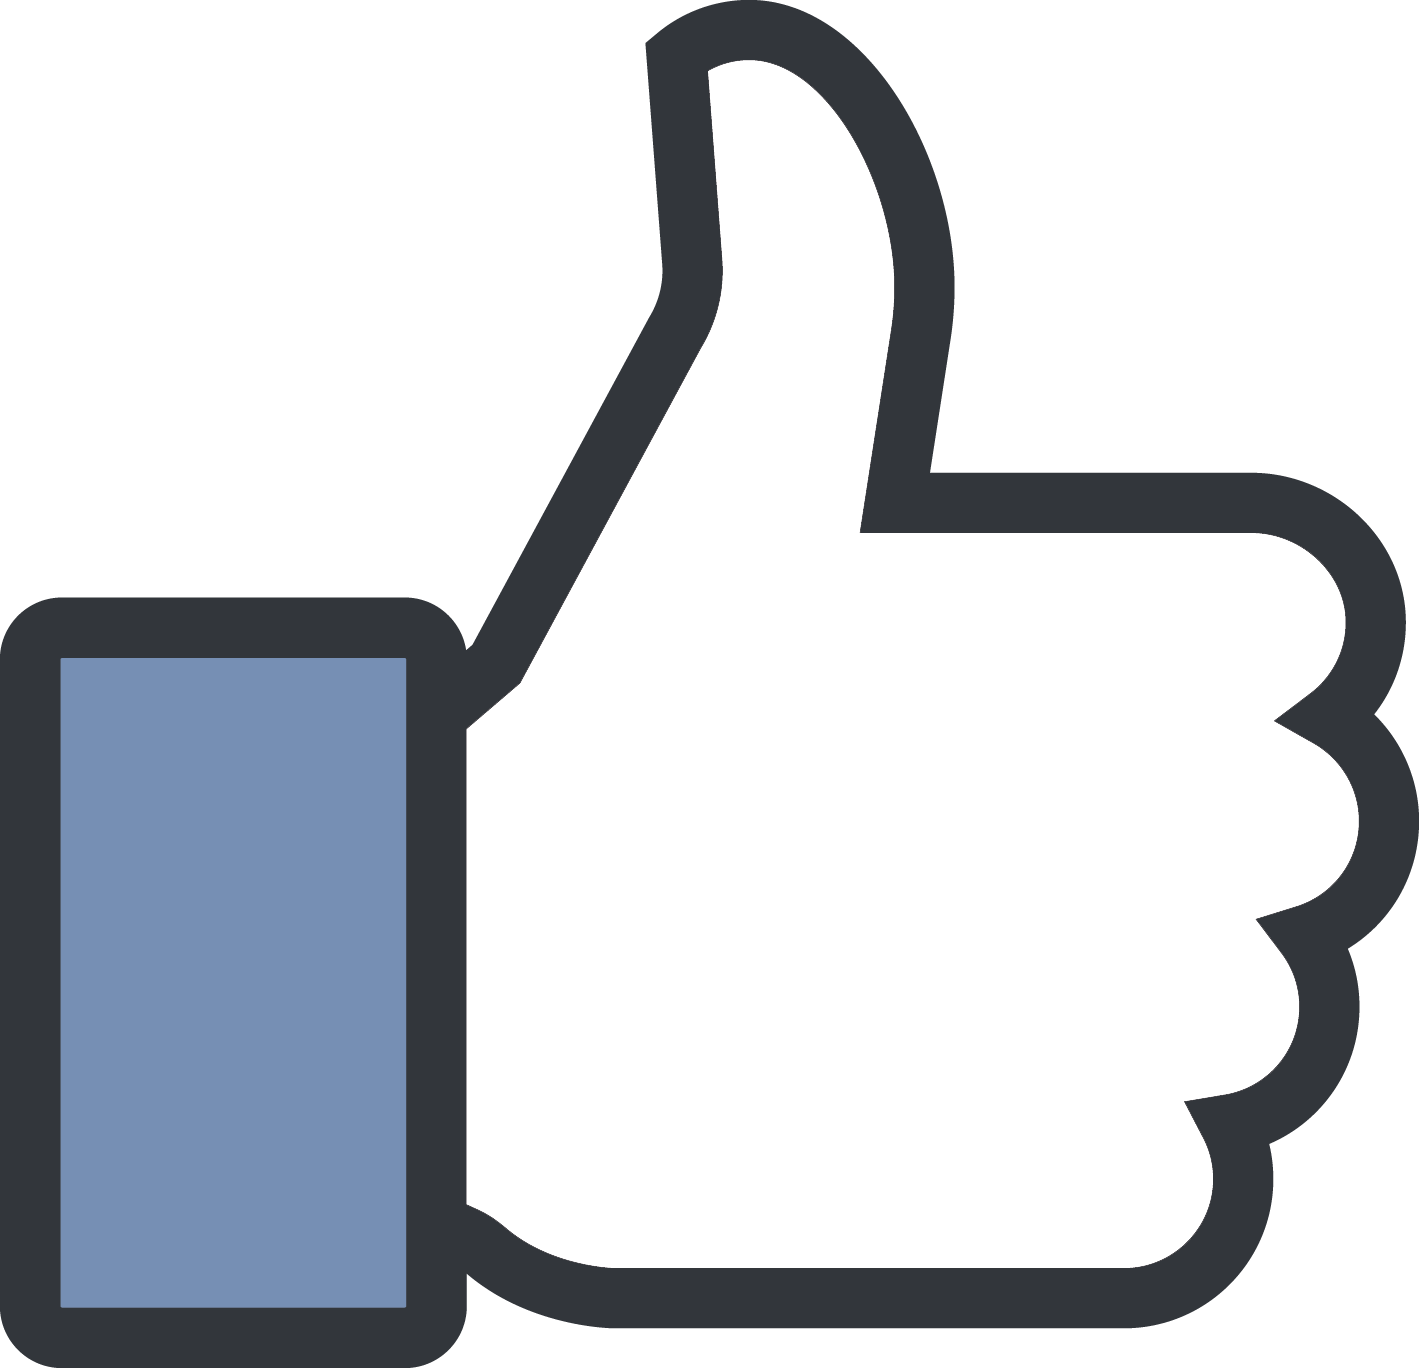 City Thumb Media Signal Facebook Social Button PNG Image